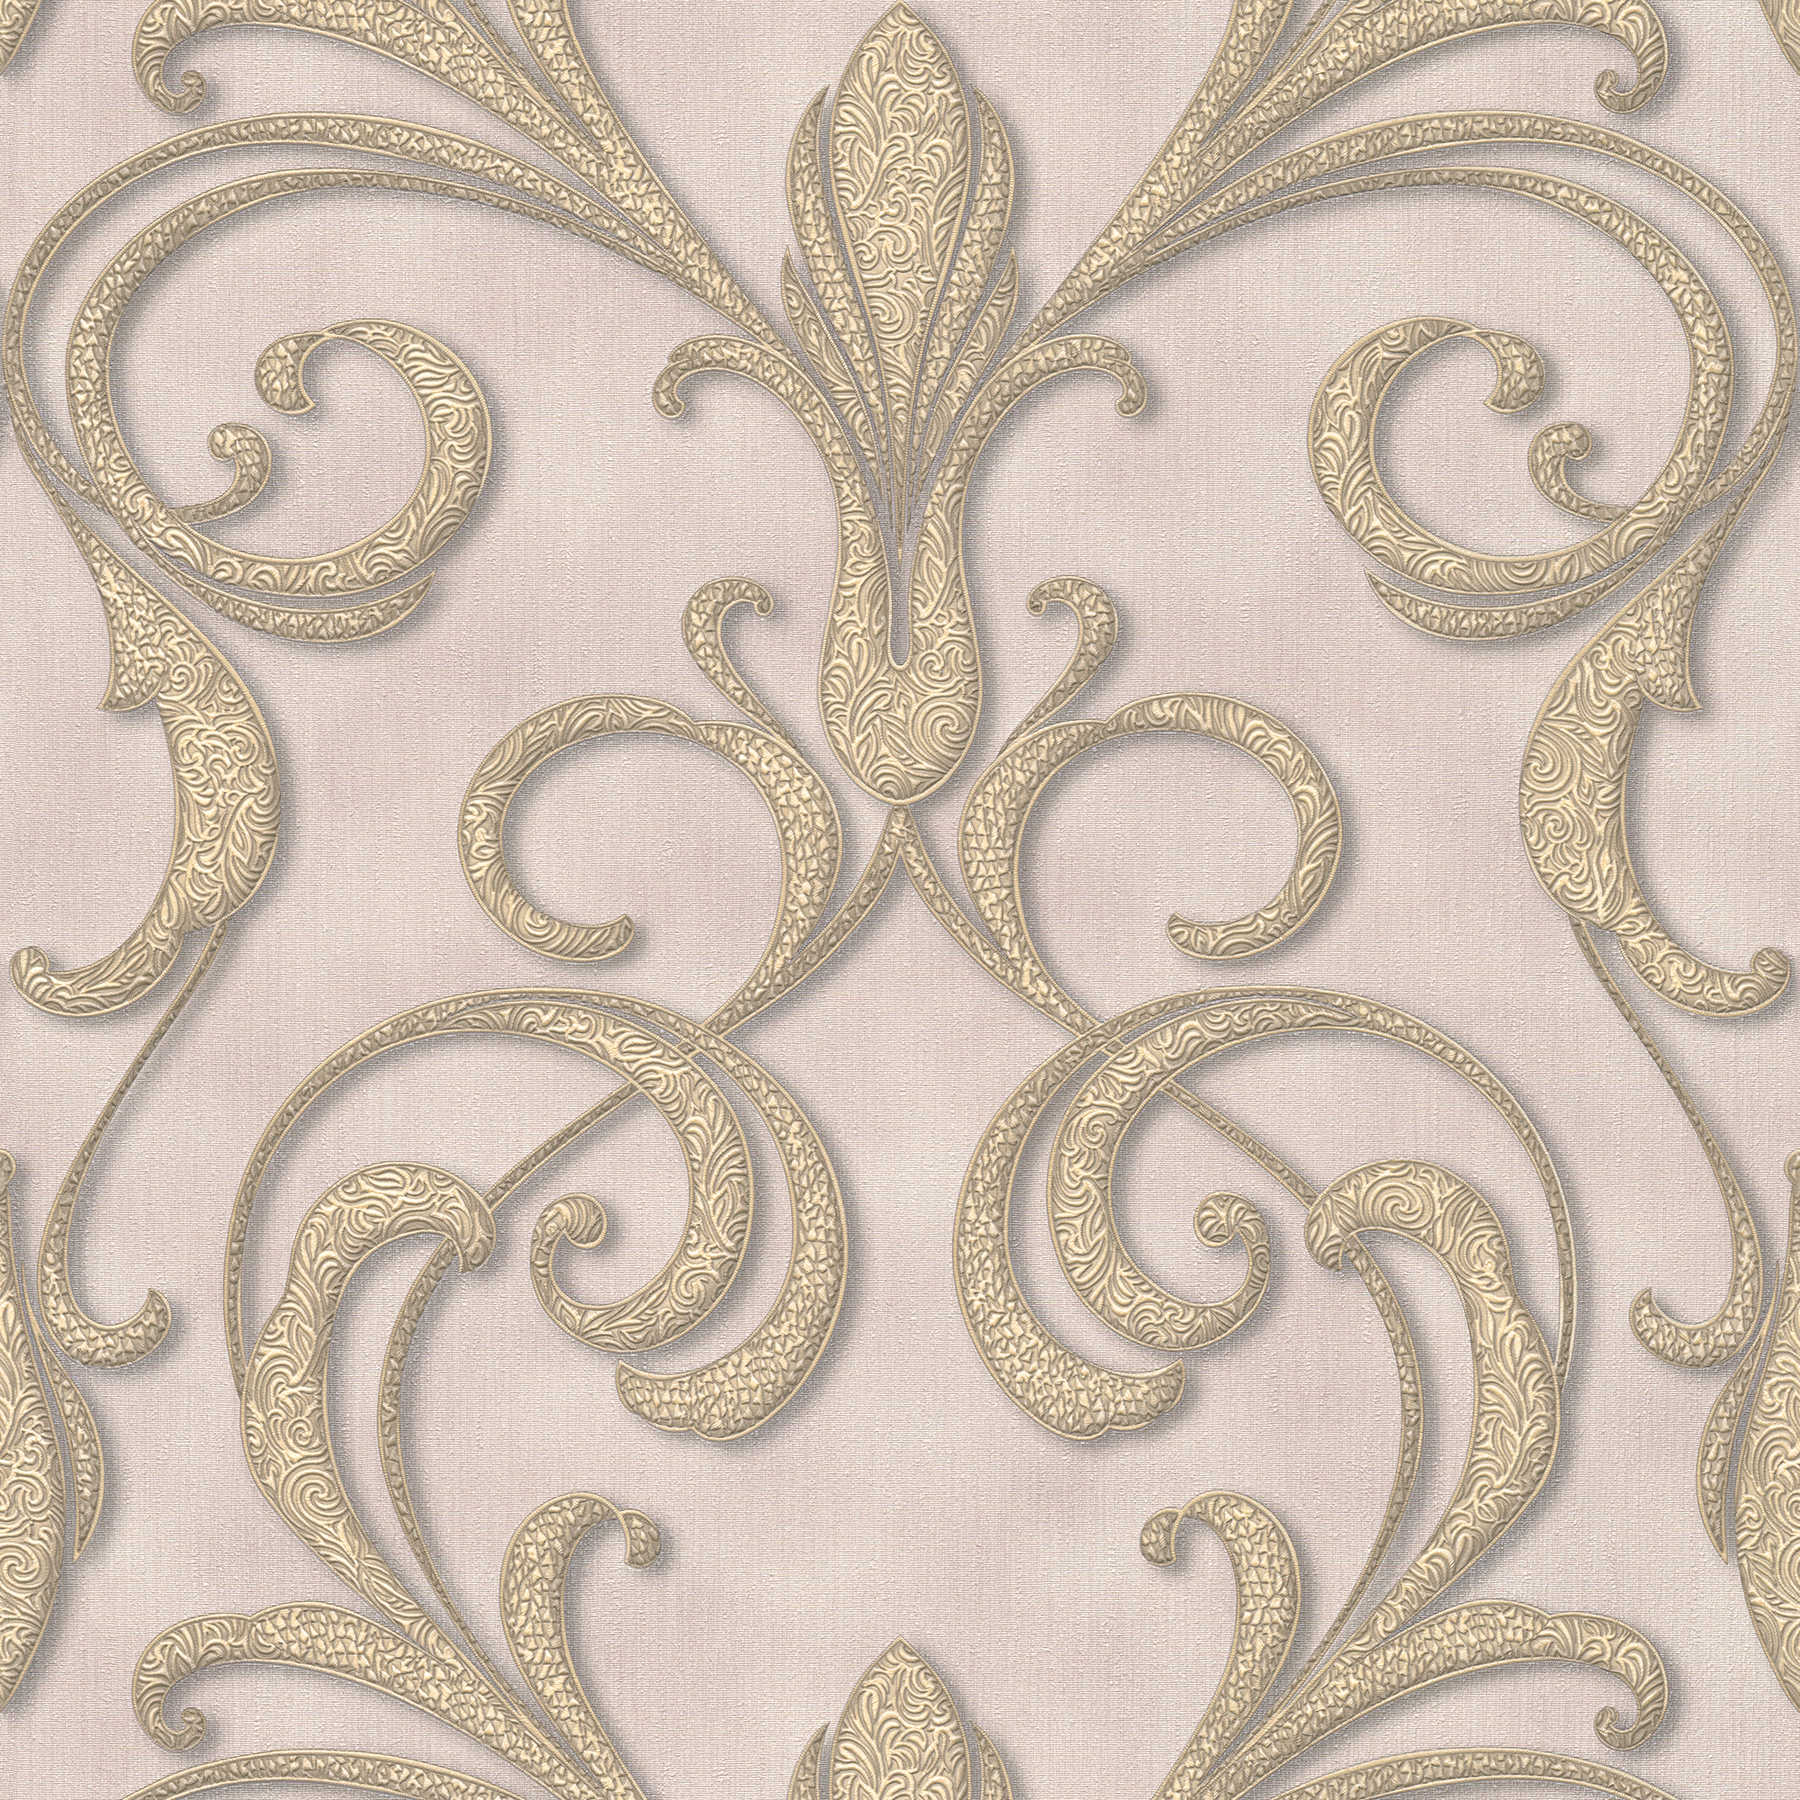         Filigrane Ornament Tapete im Barockstil – Gold, Lila, Braun
    